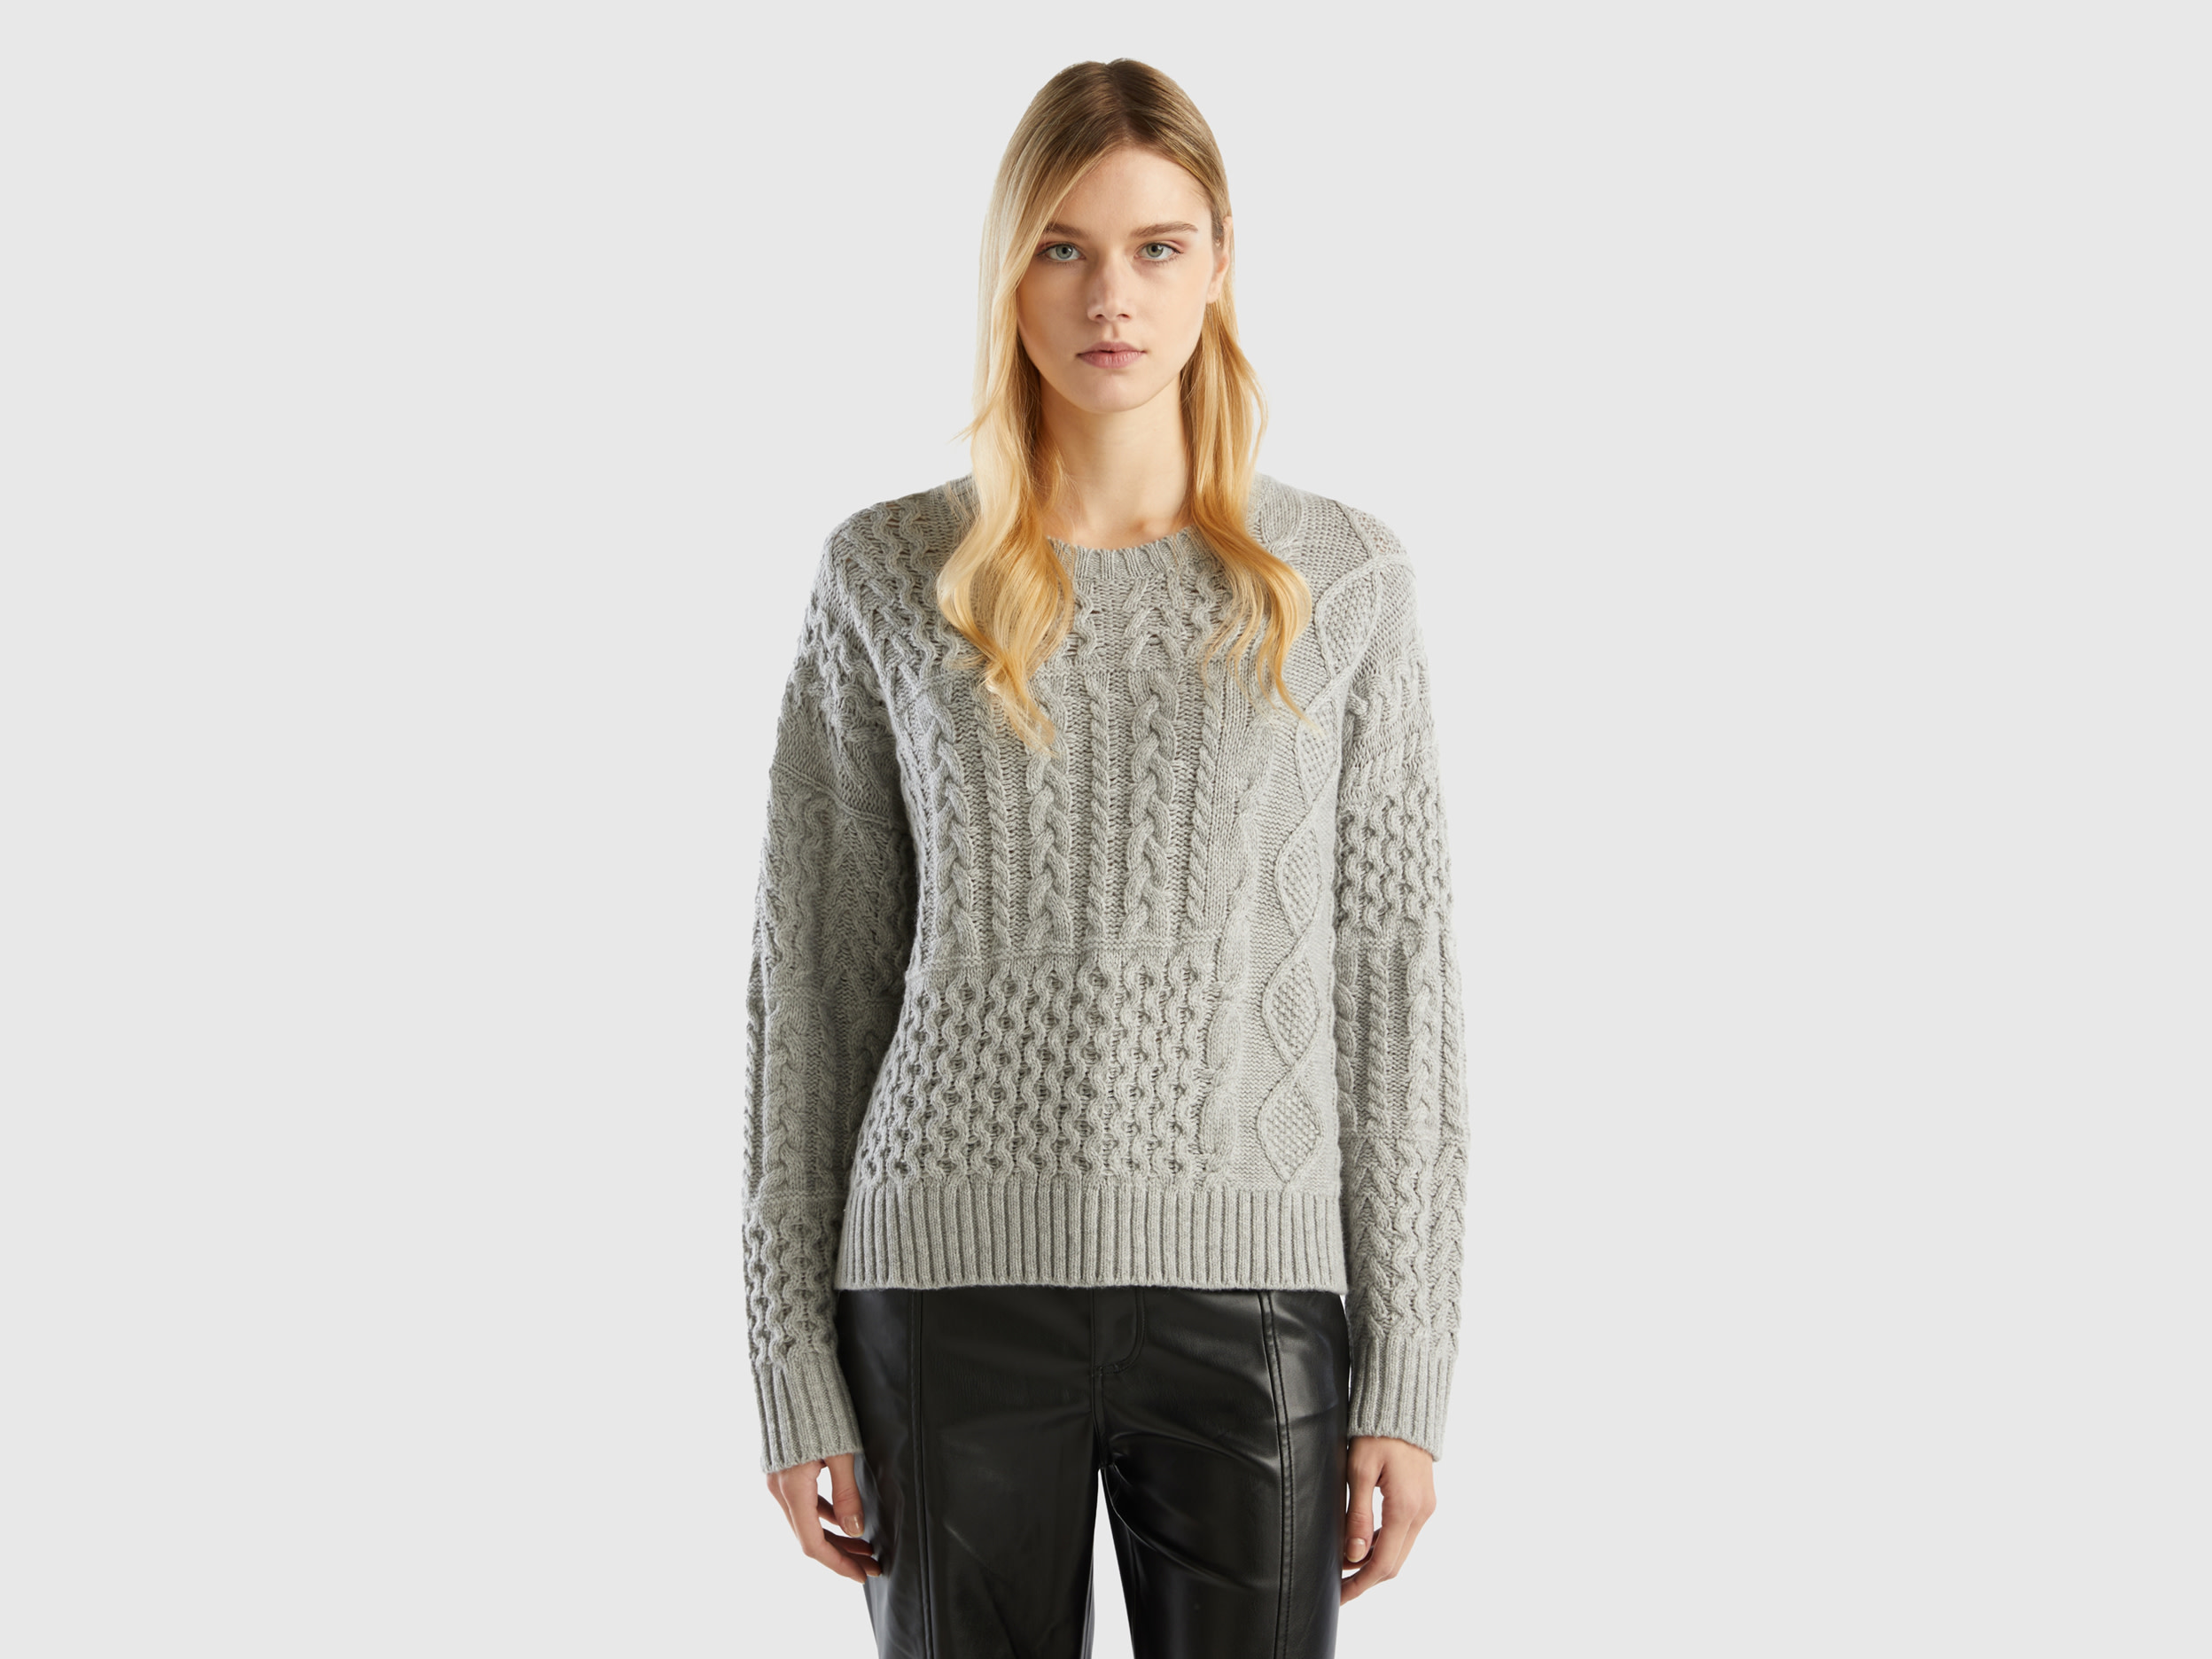 Benetton, Knit Patchwork Sweater, size XS-S, Light Gray, Women